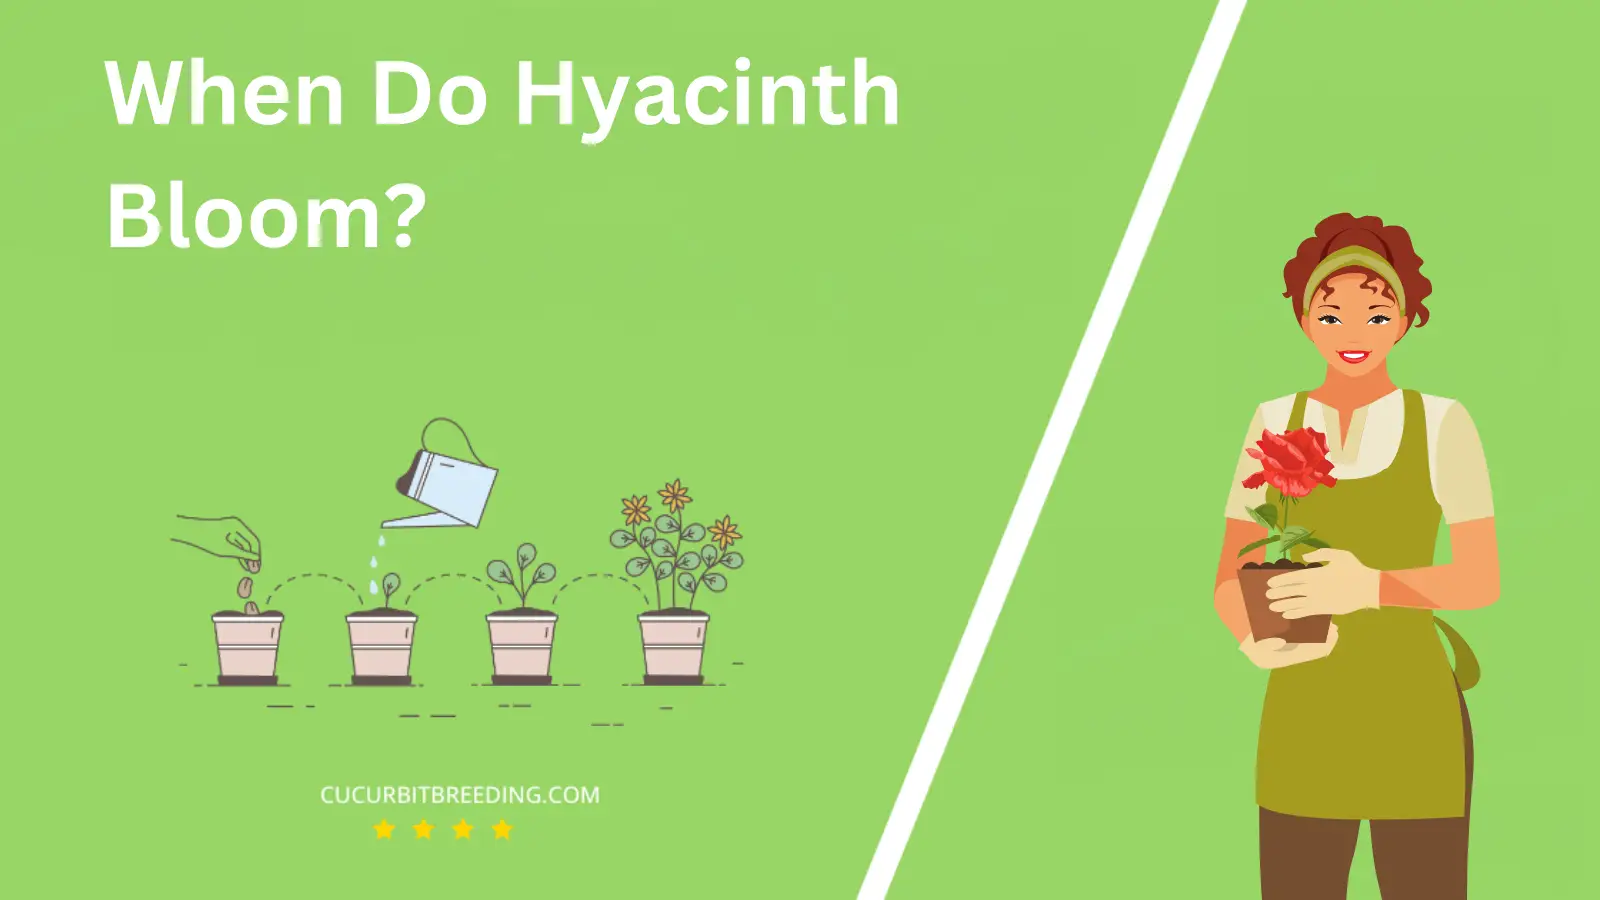 When Do Hyacinth Bloom?